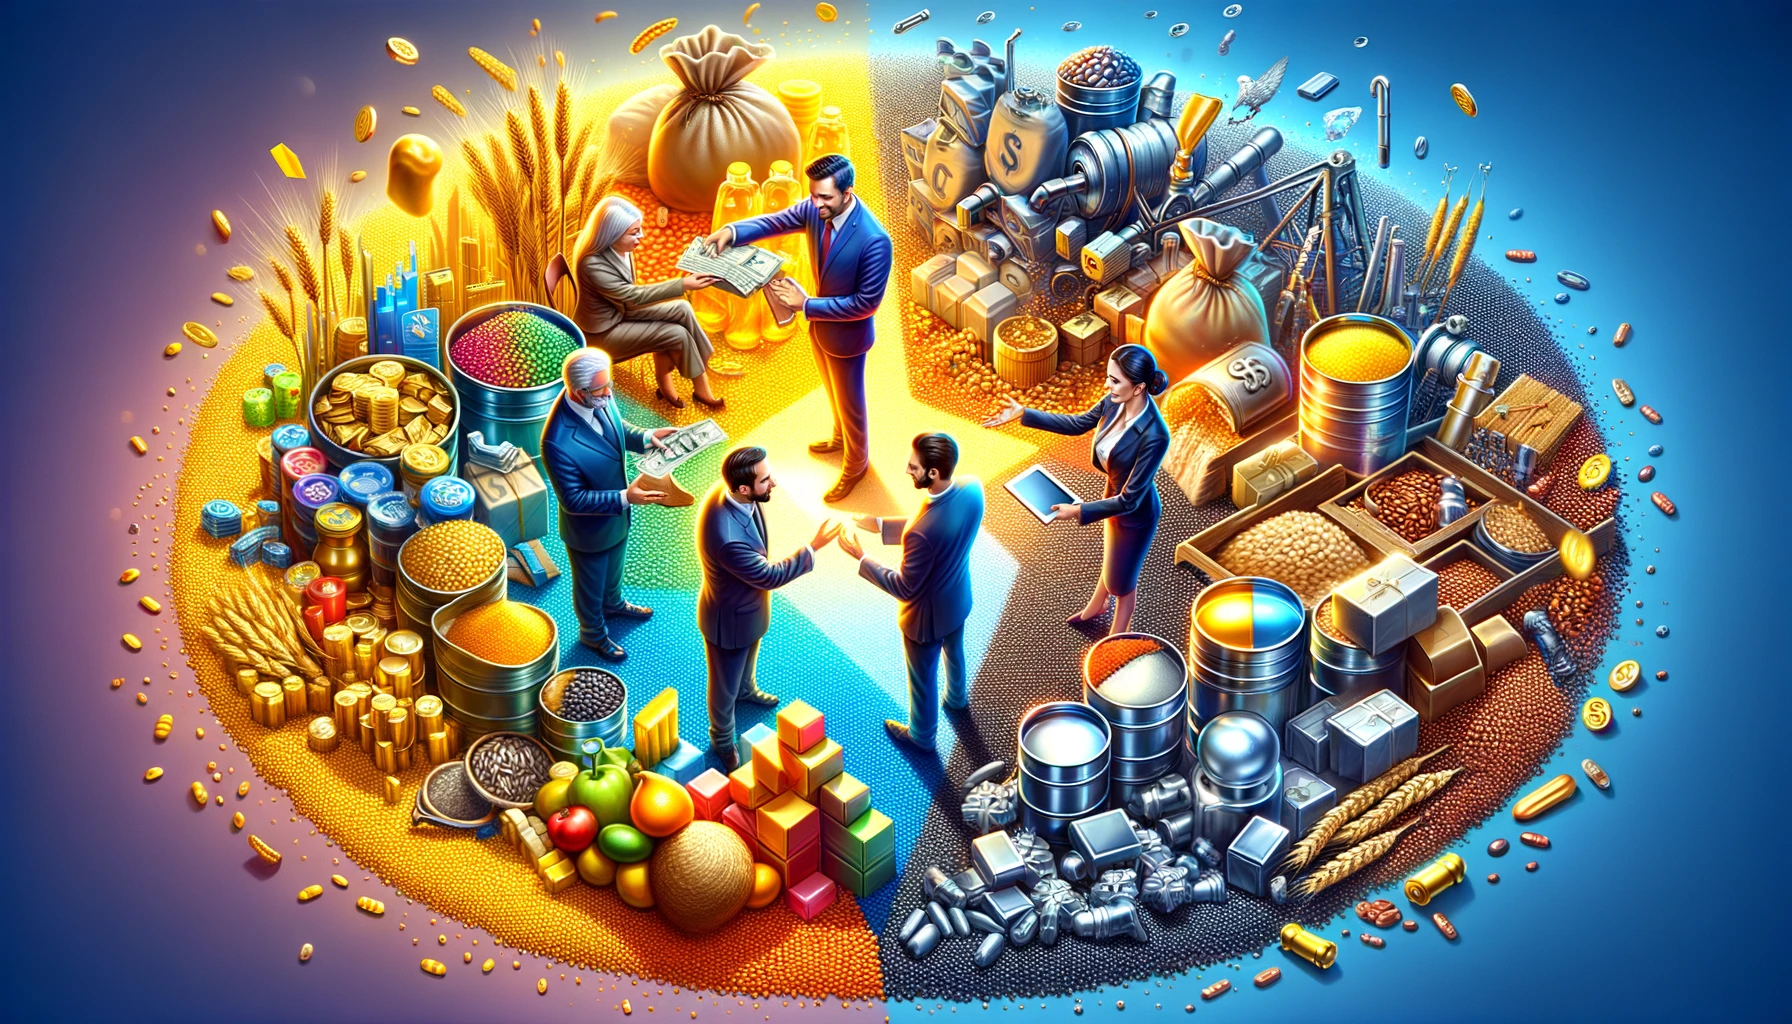 commodity-trading